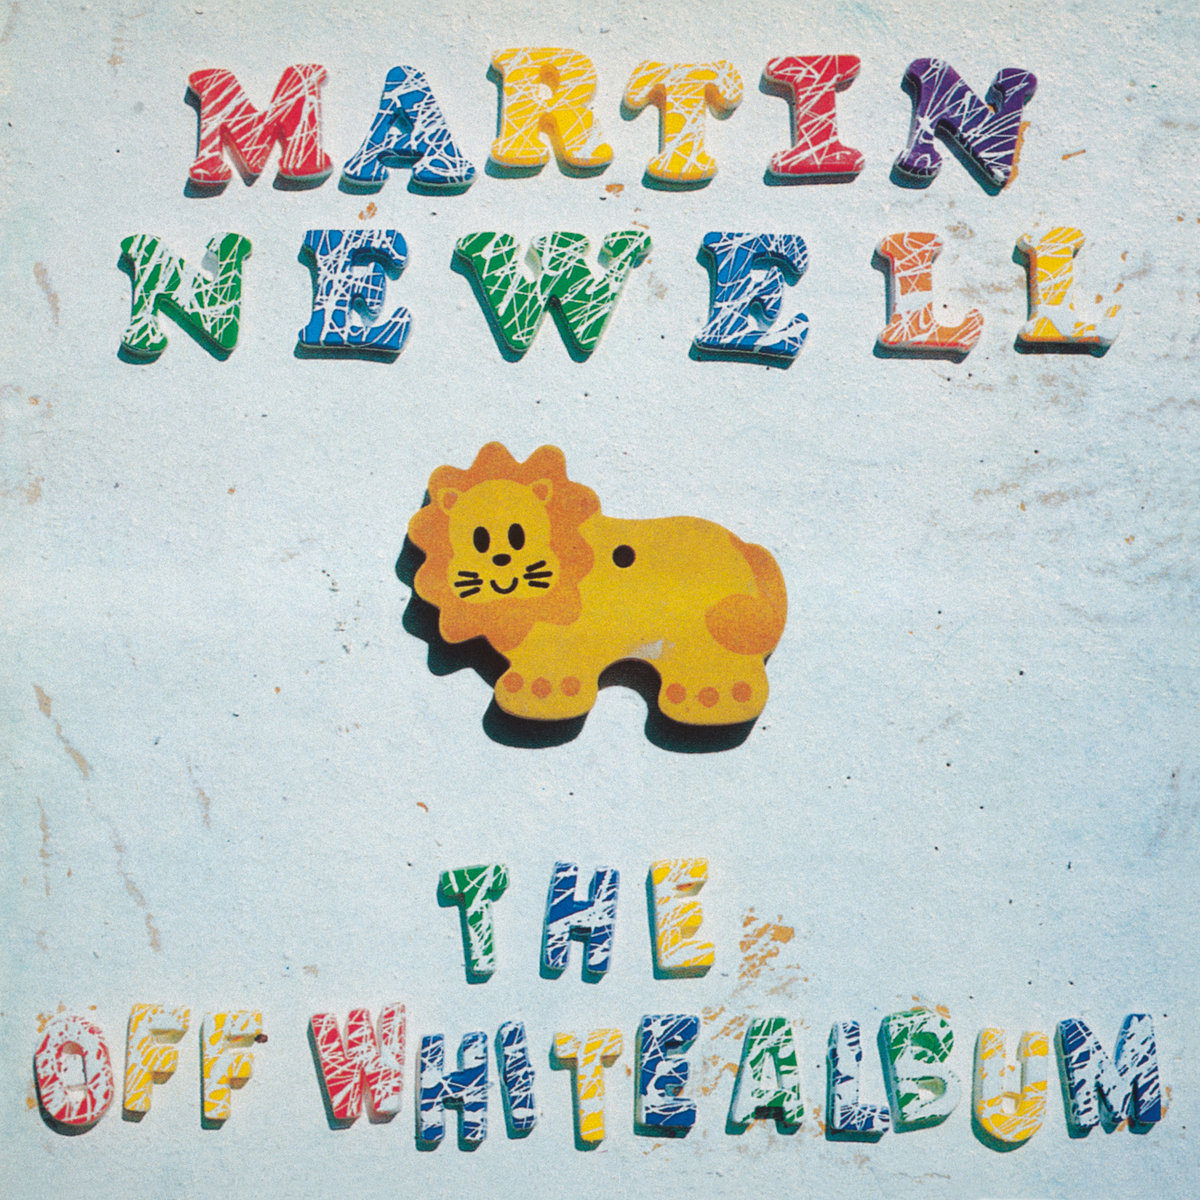 ALBUM ANNOUNCEMENT//Martin Newell – The Off White Album